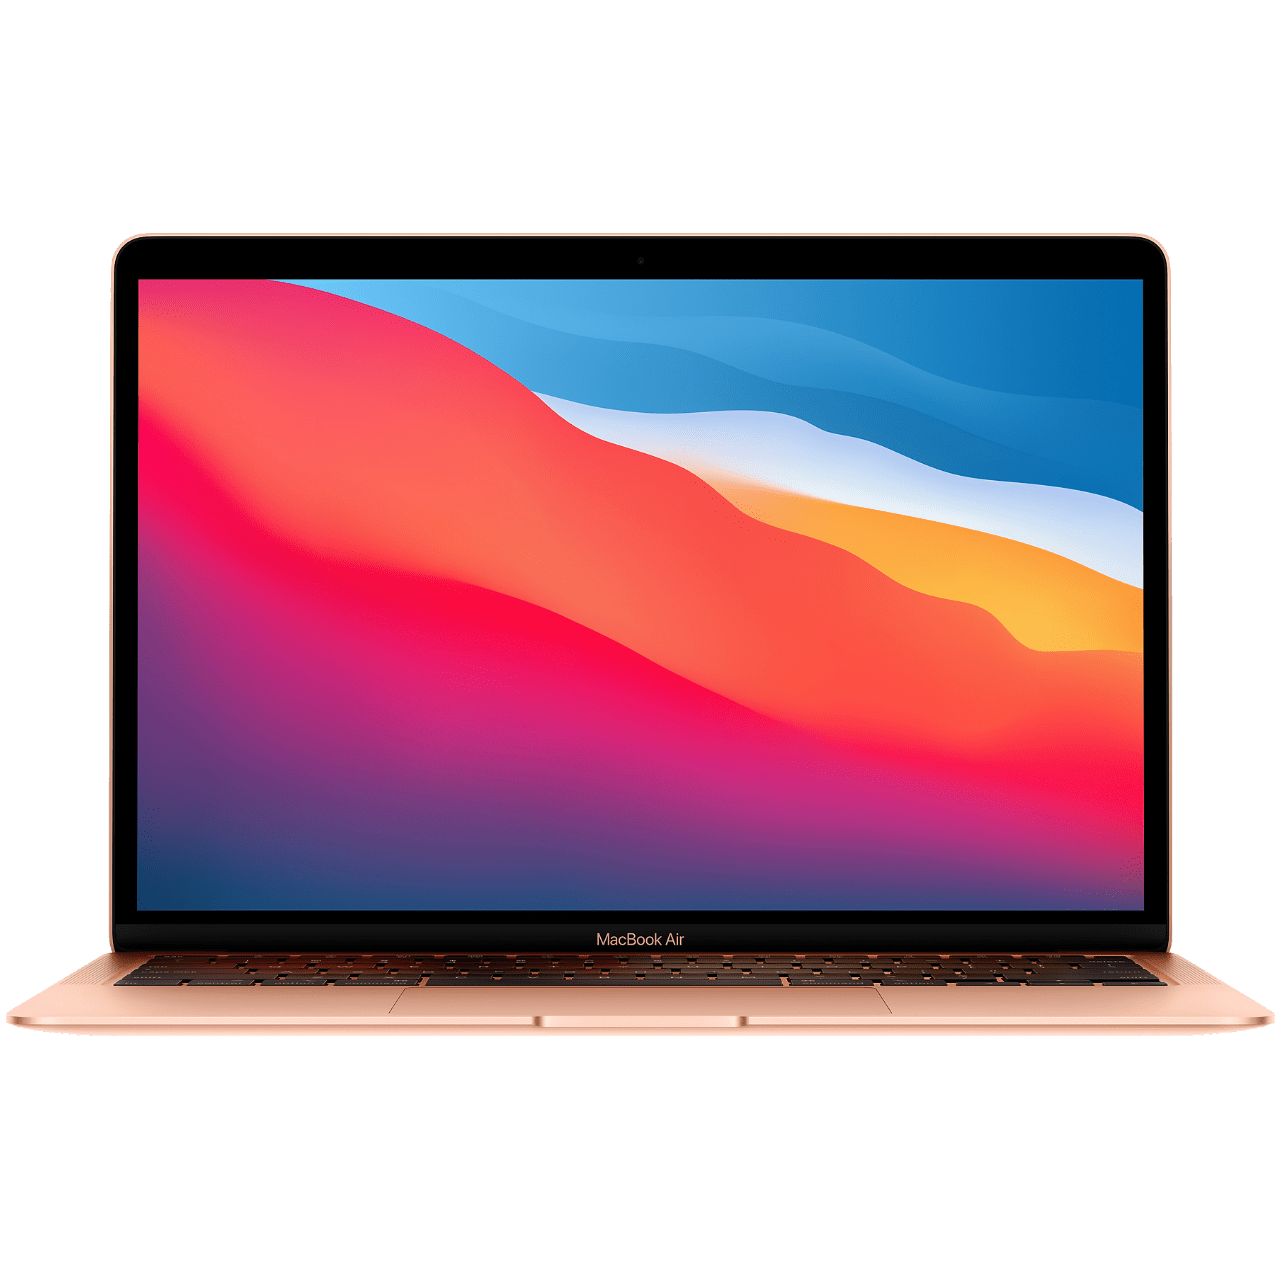 MacBook Pro 2021 : prix, date de sortie, design, fiche technique